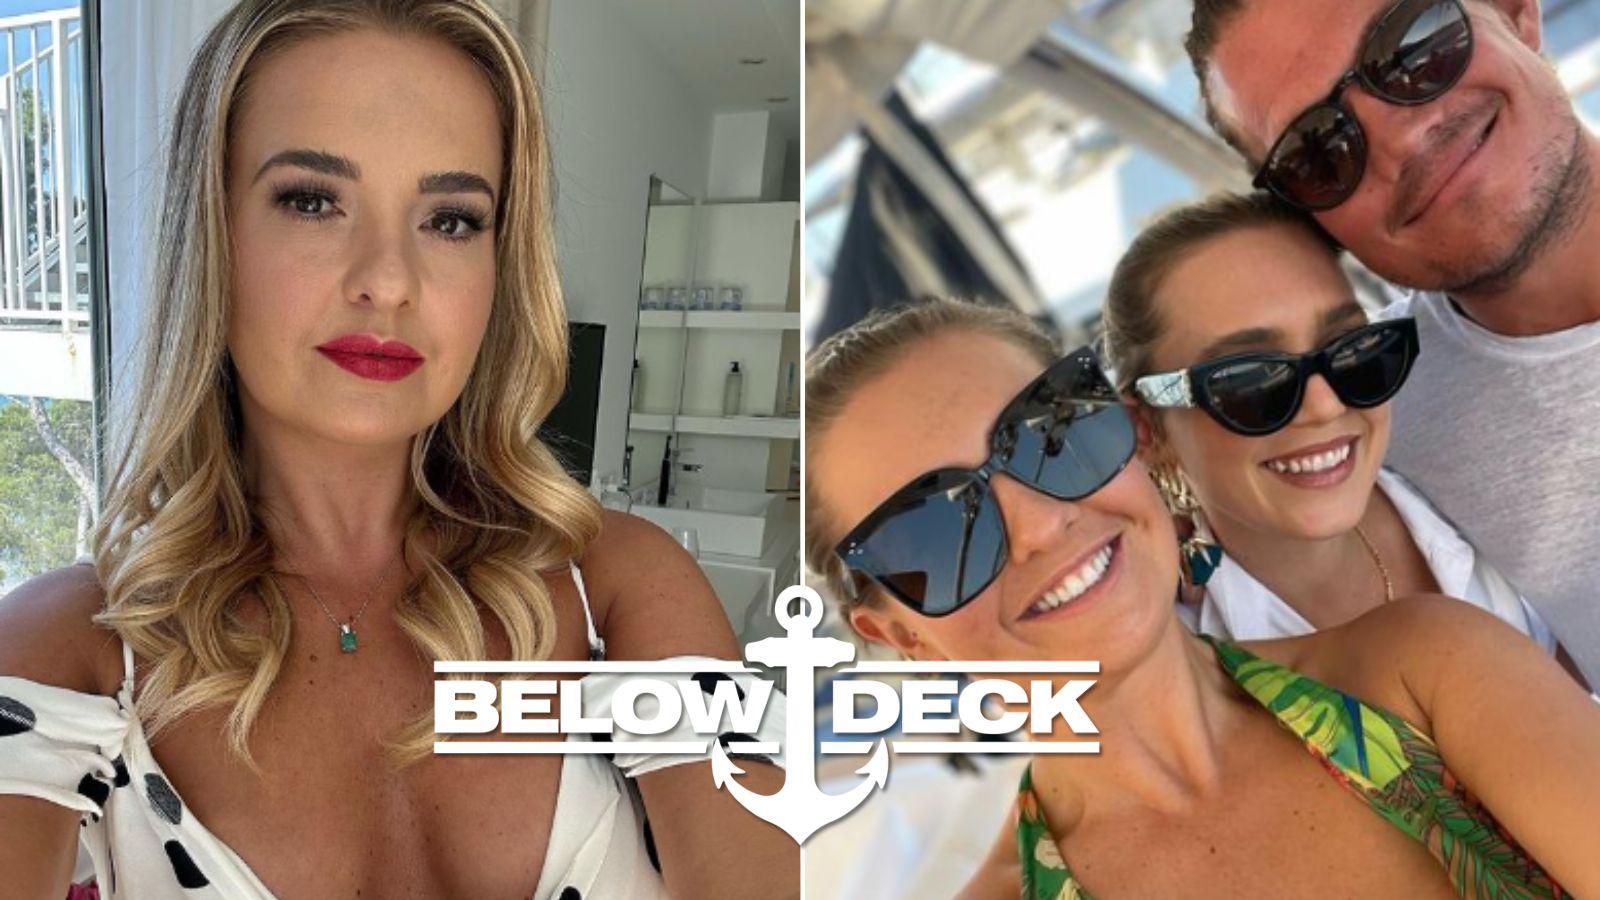 Below Deck Sailing Yacht Season 4 reunion confirmed by cast members